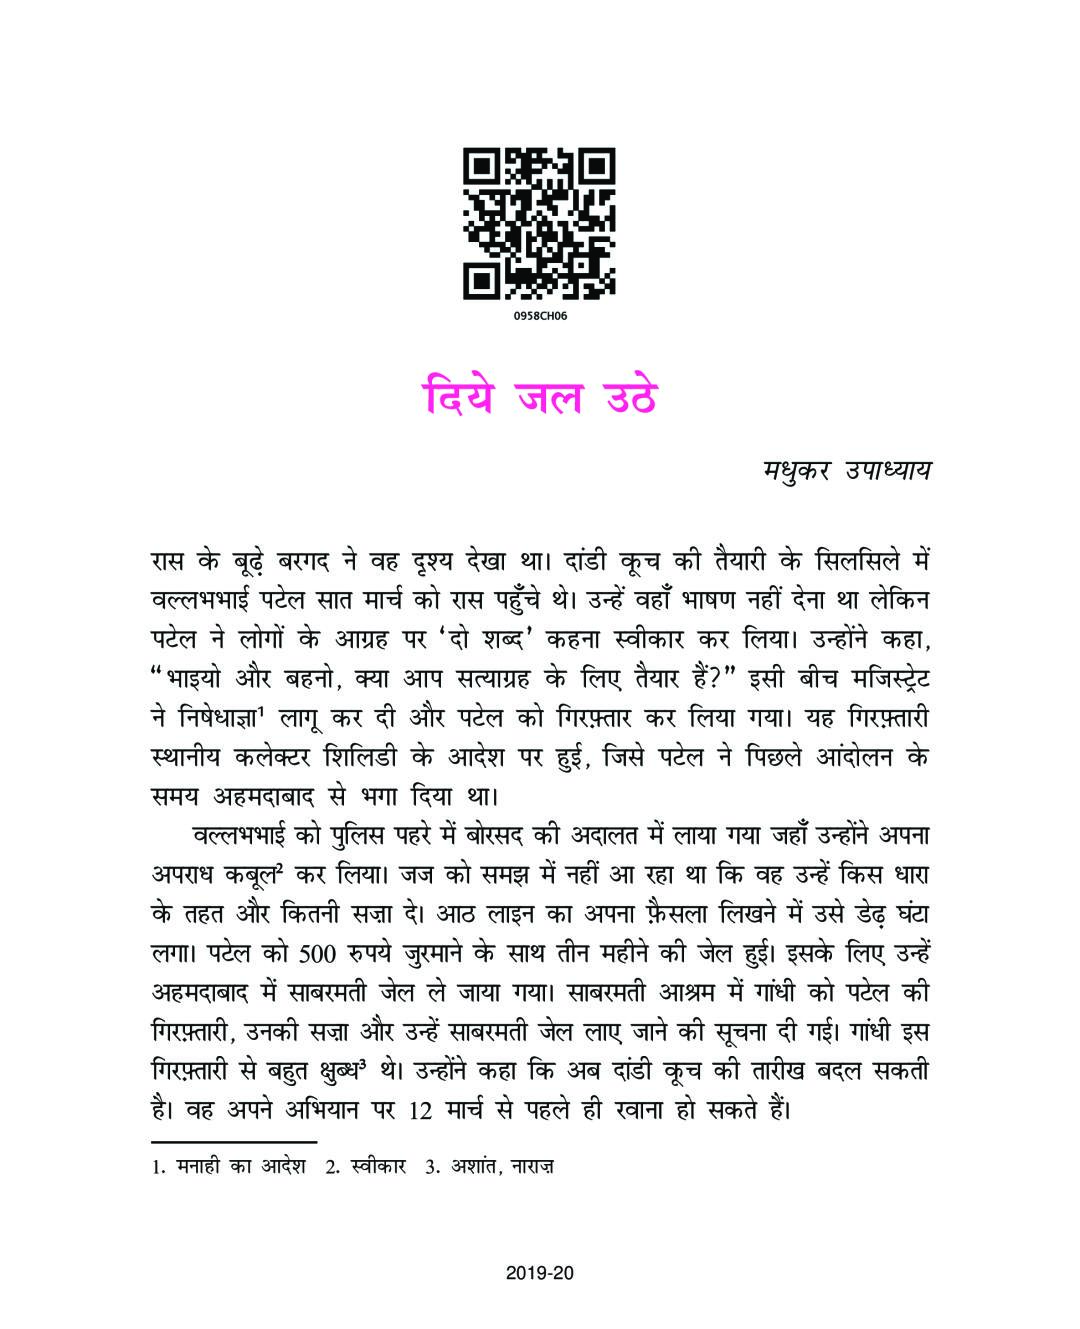 NCERT Book Class 9 Hindi (संचयन) Chapter 6 दिये जल उठे - Page 1